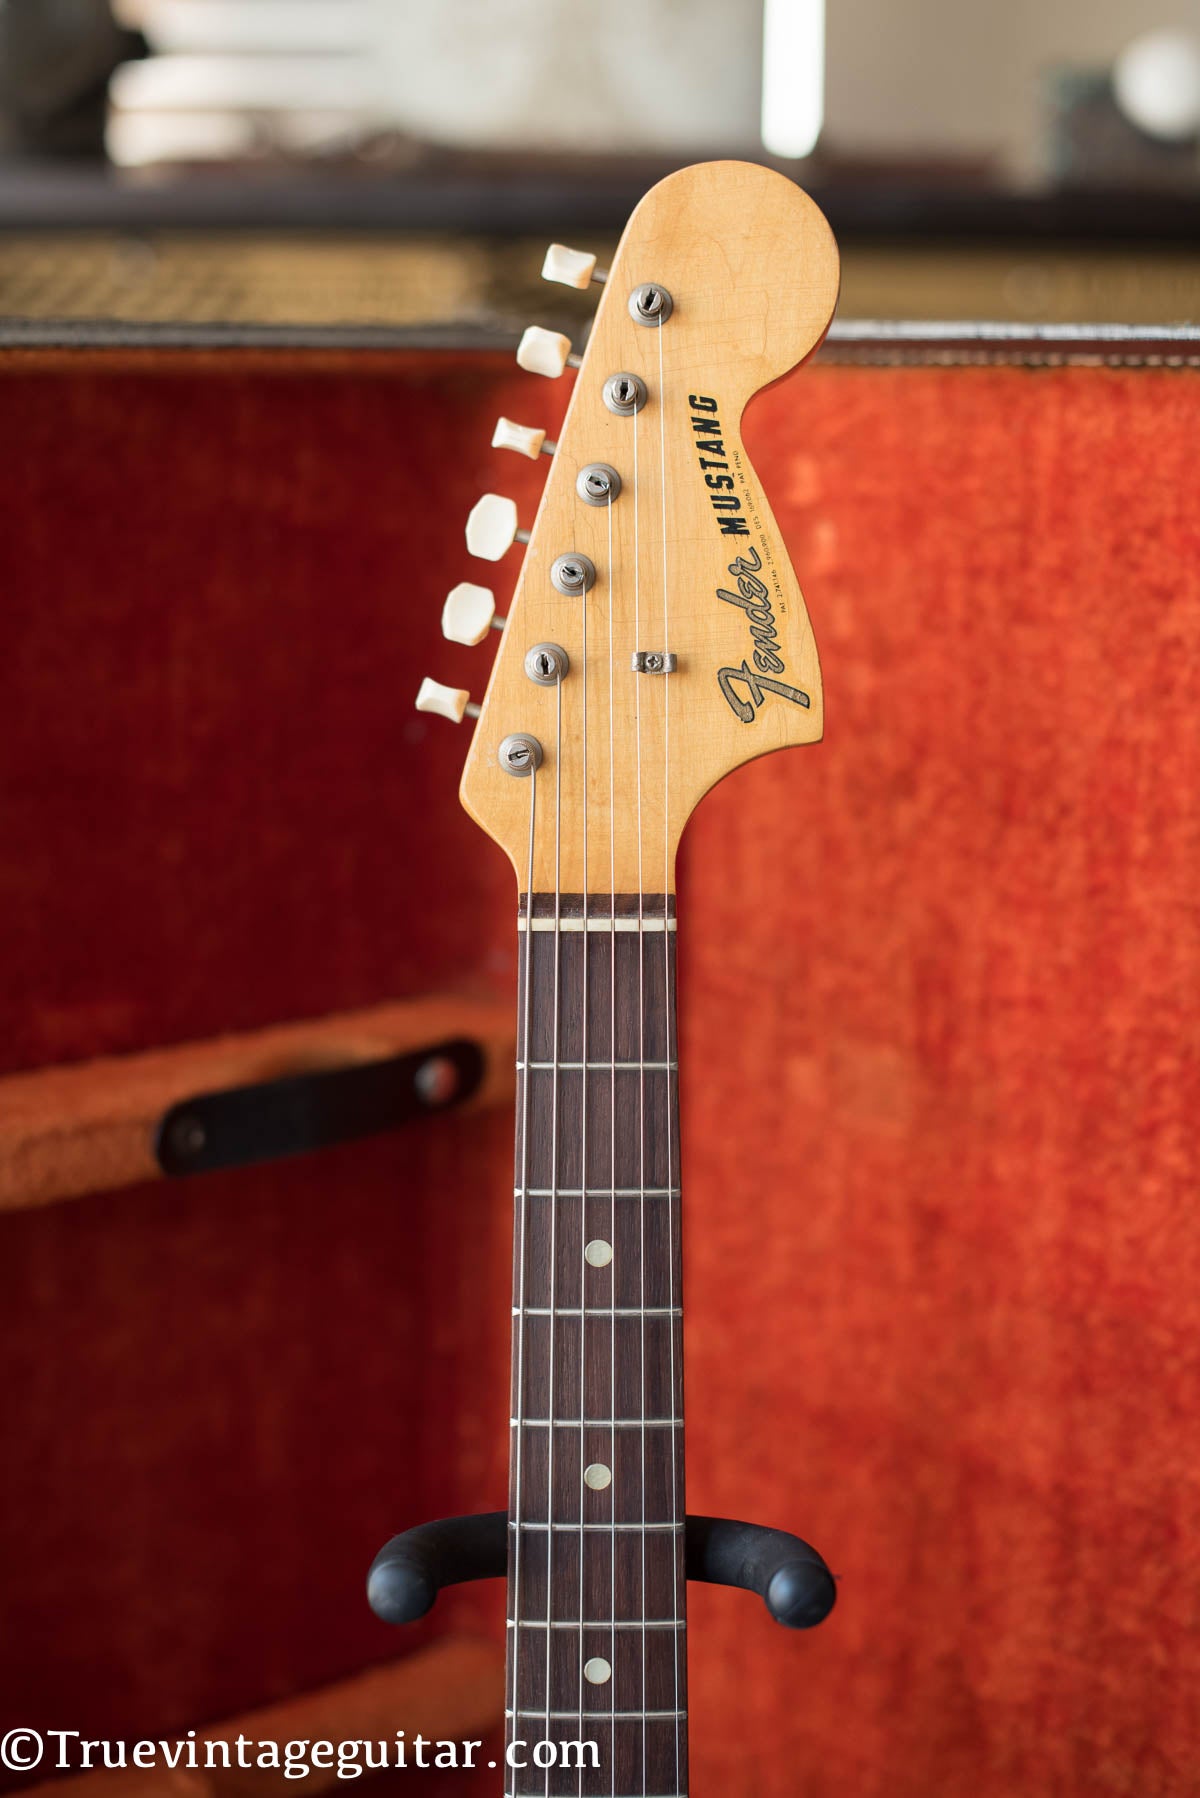 Fender Mustang neck 1960s vintage